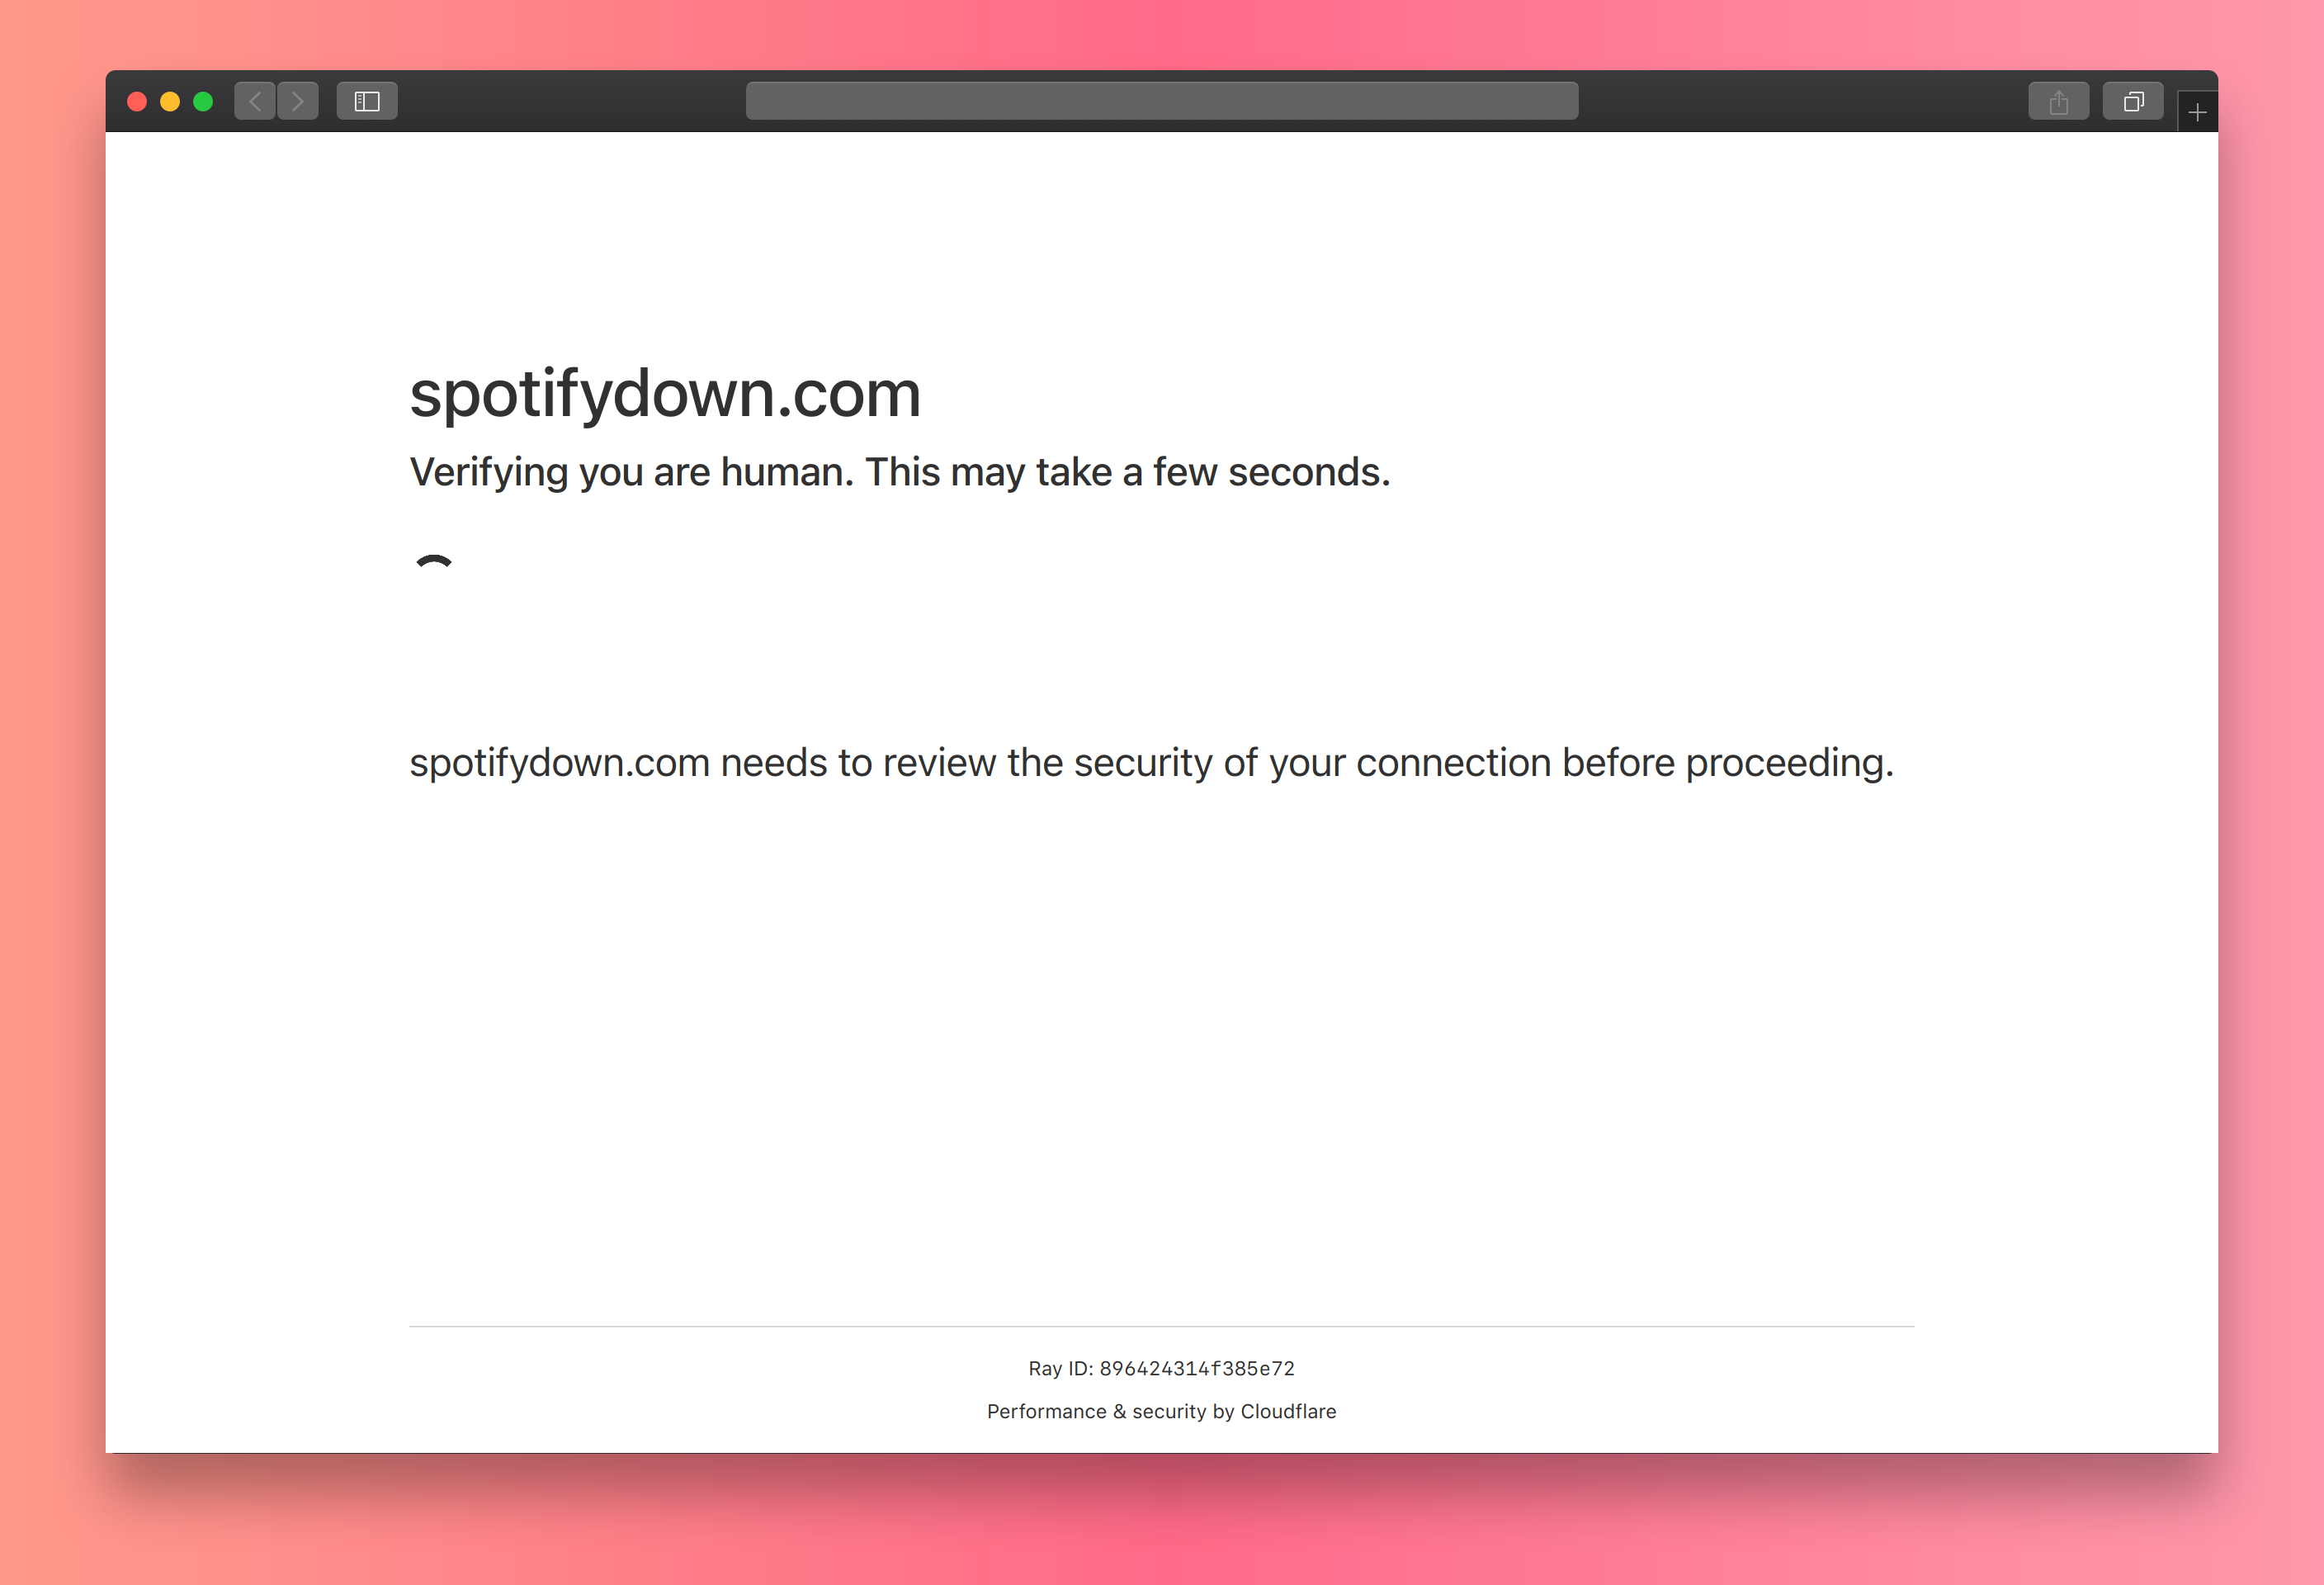 spotifydown.com